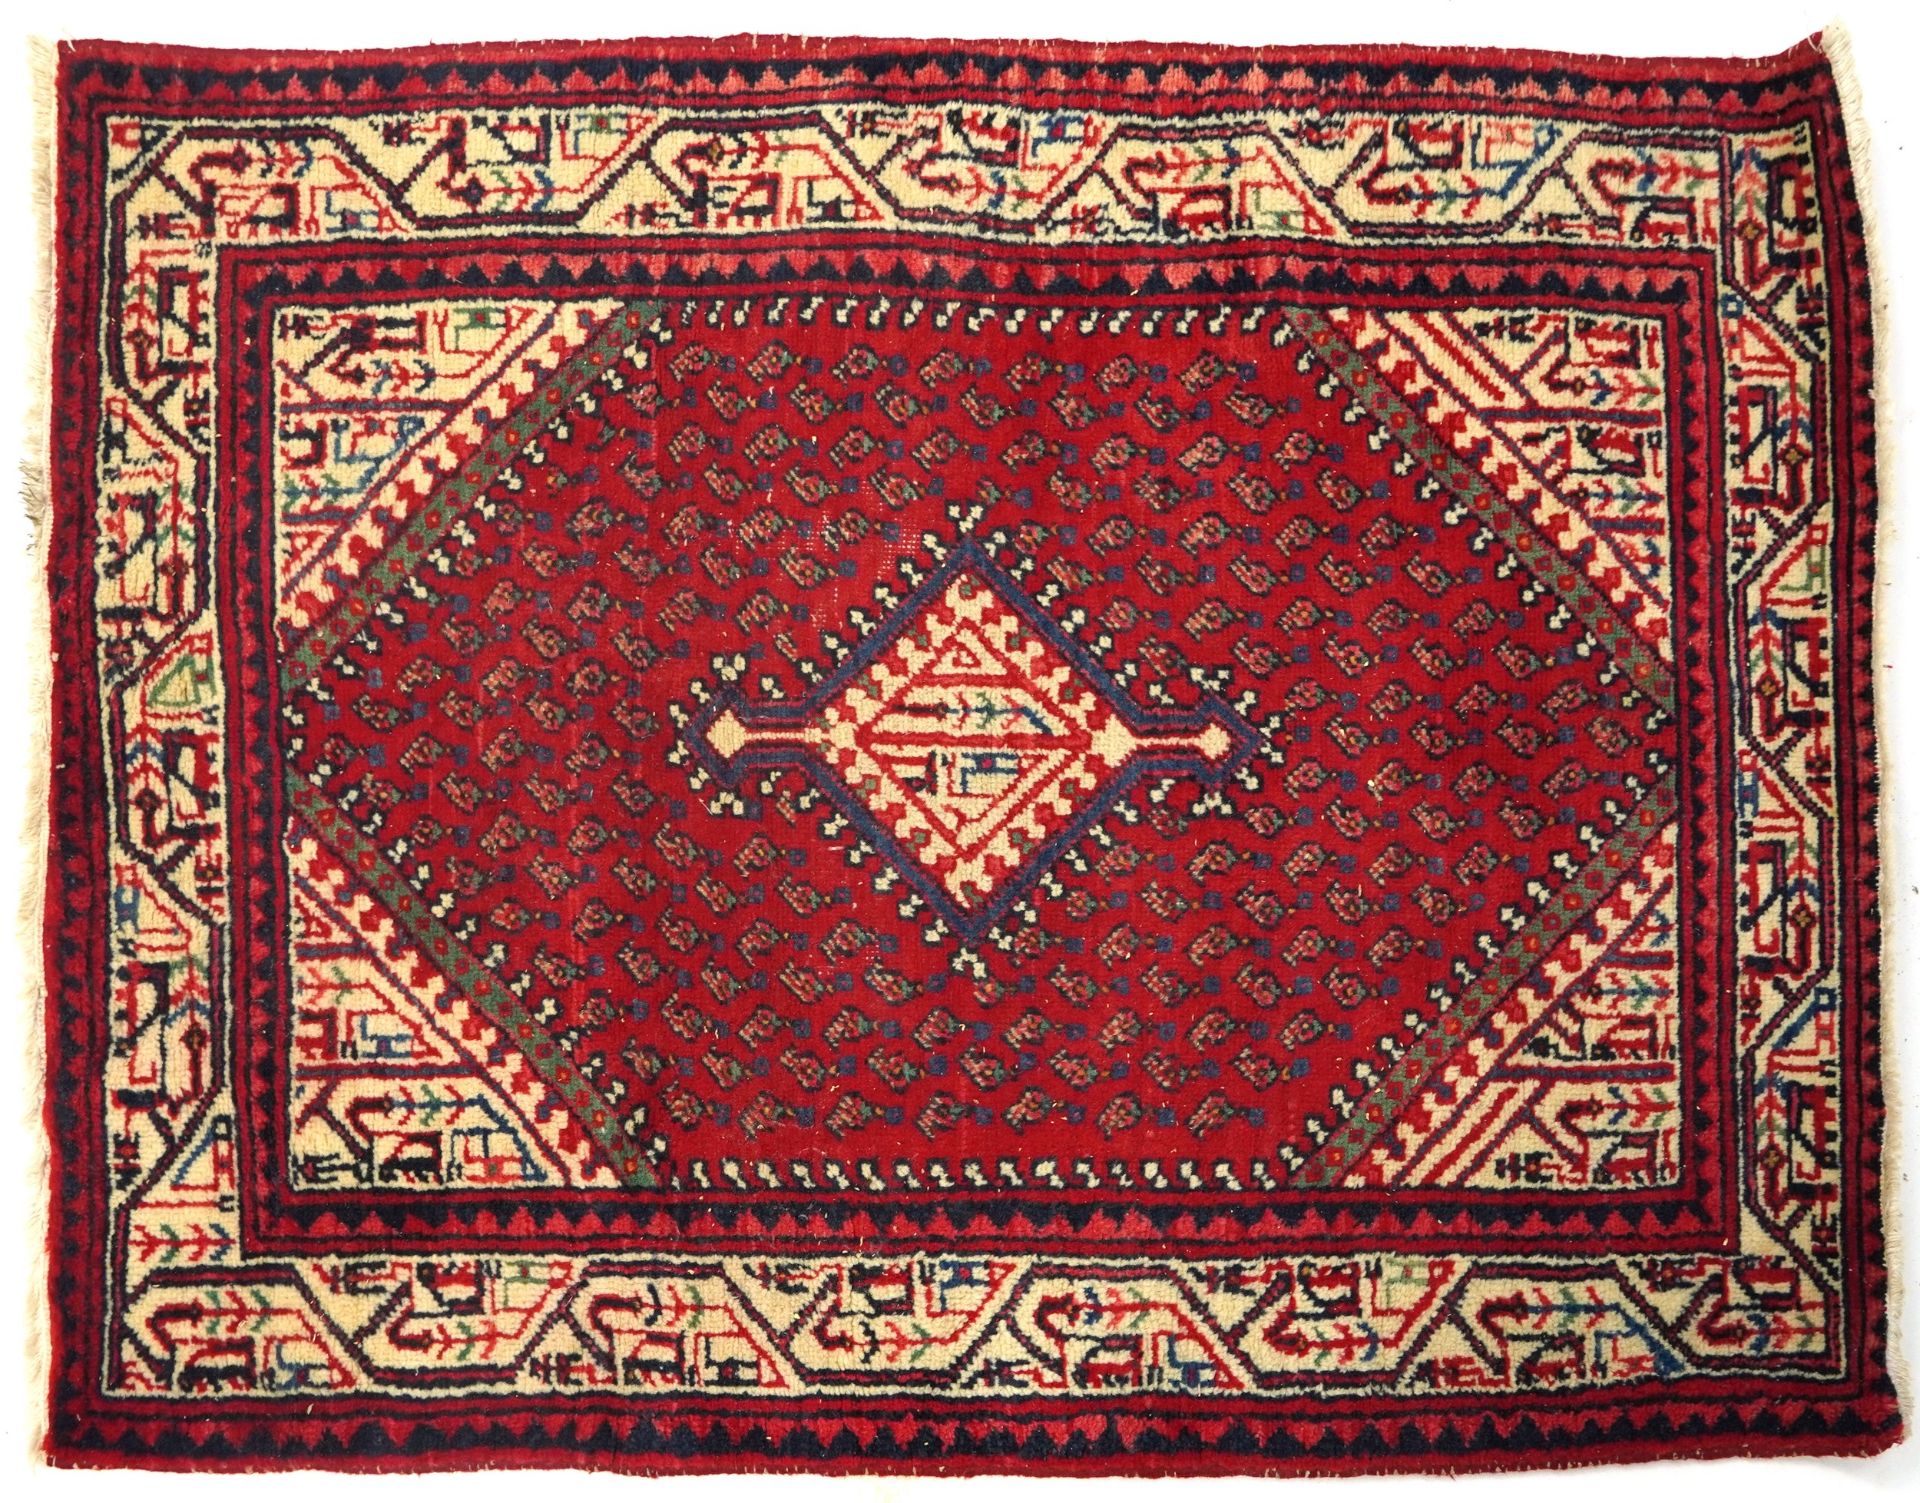 Rectangular Middle Eastern red ground rug, 155cm x 105cm